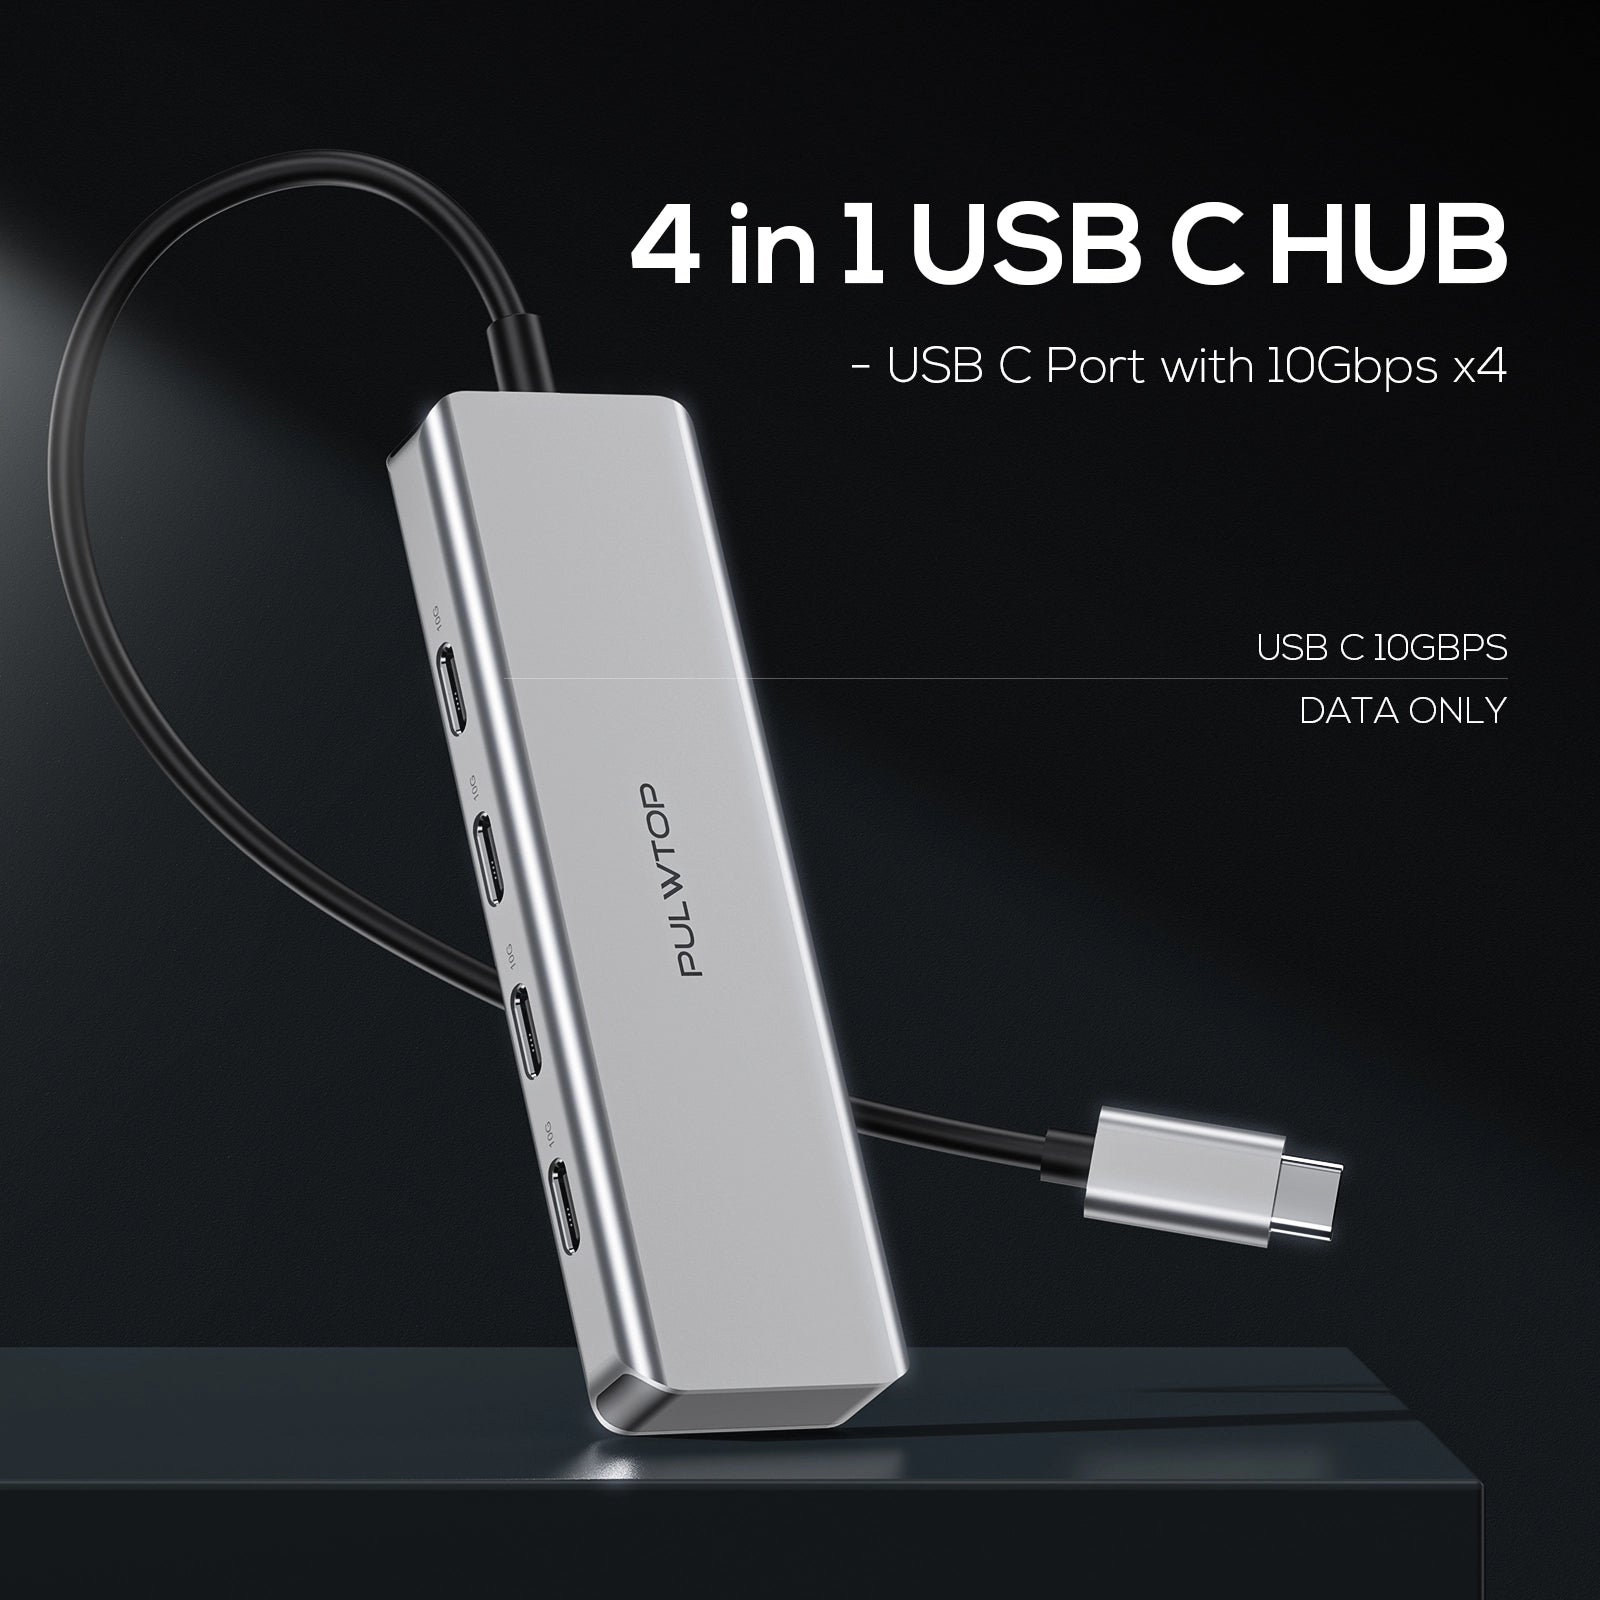 USB C Hub 10Gbps,USB C Splitter for Laptop with 4 USB 3.0 Ports,USB C